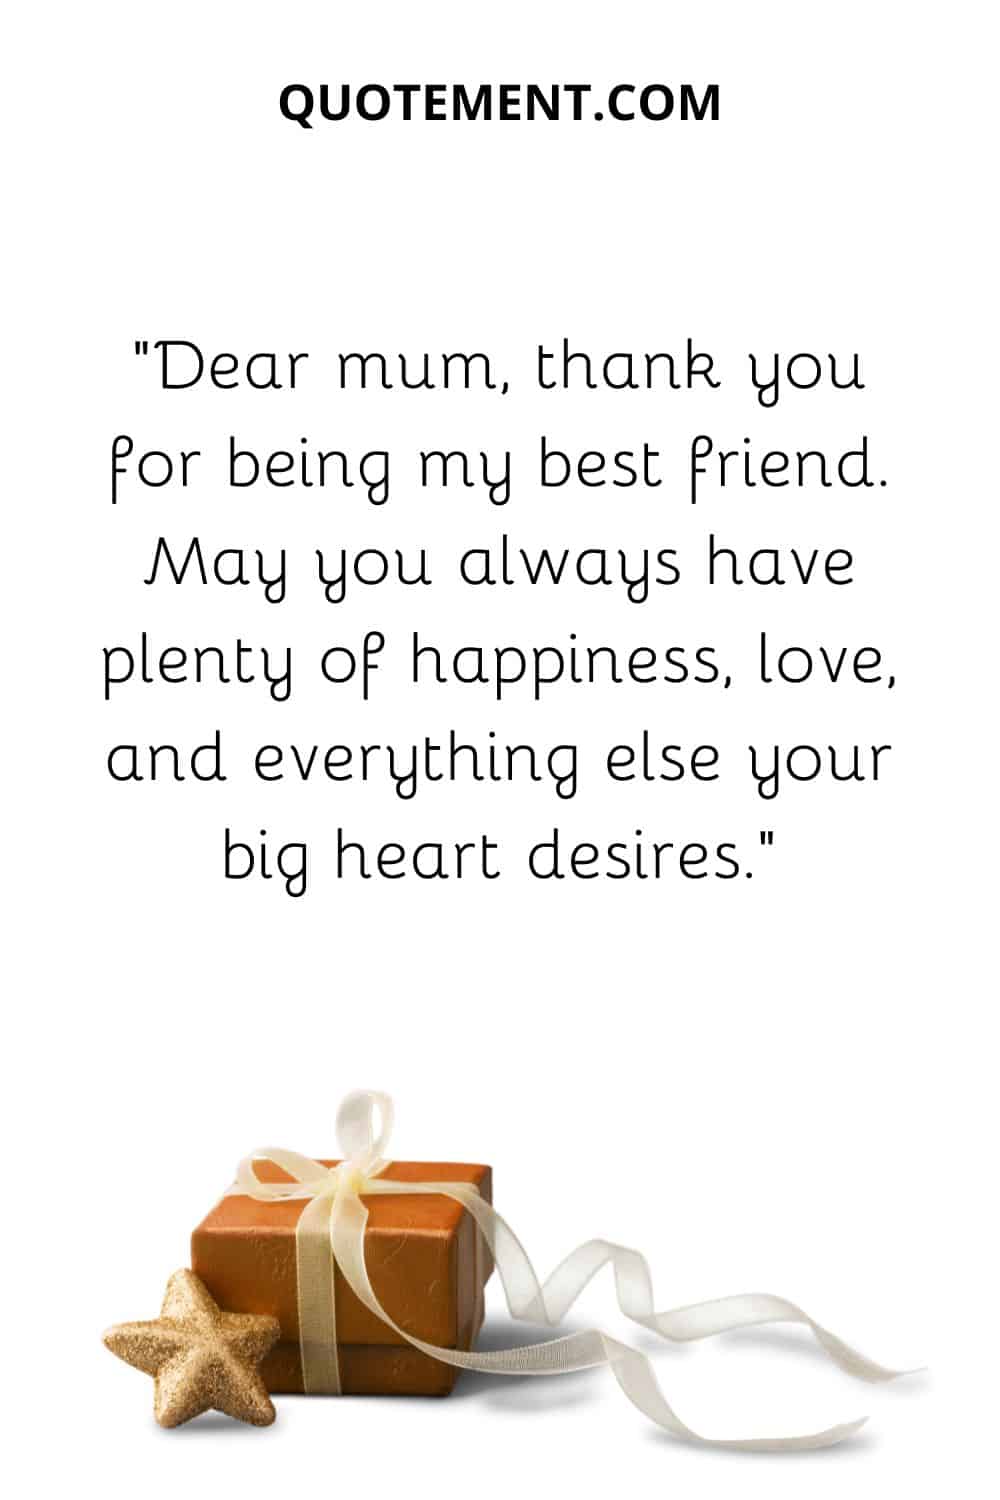 Dear mum, thank you for being my best friend